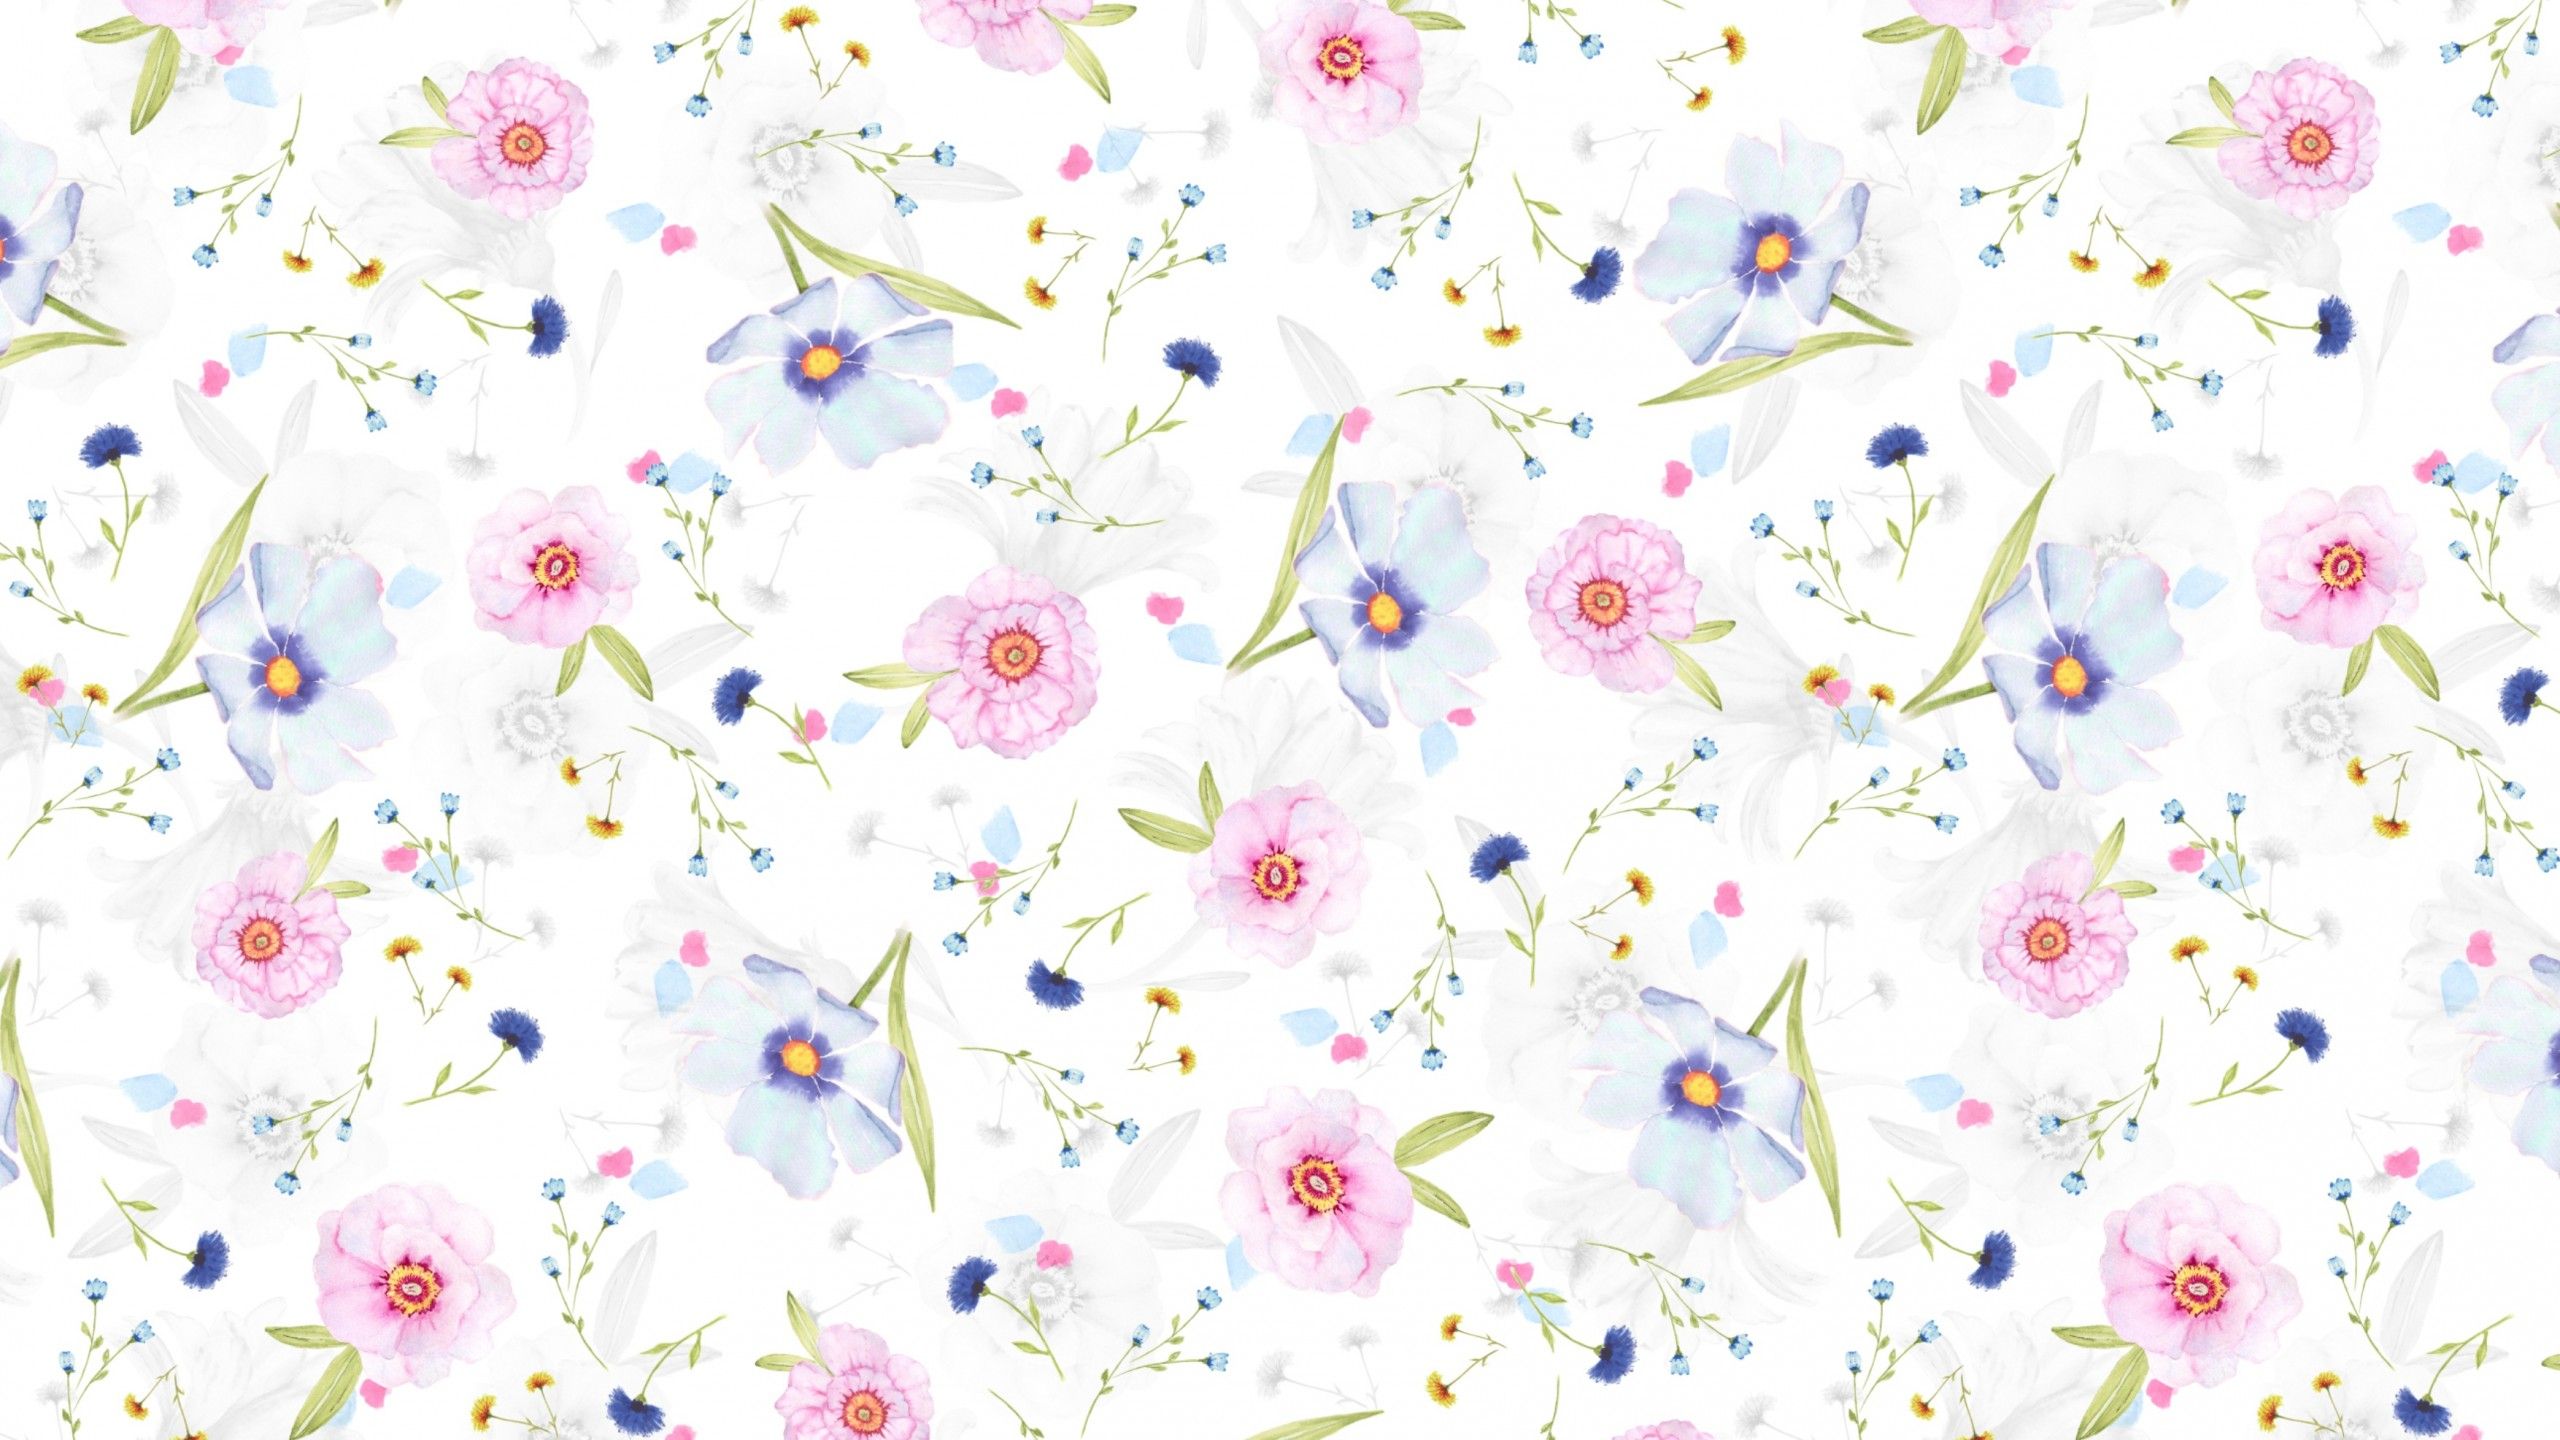 Floral designs 4K Wallpaper, White background, Flower patterns, Girly background, Floral, Flowers